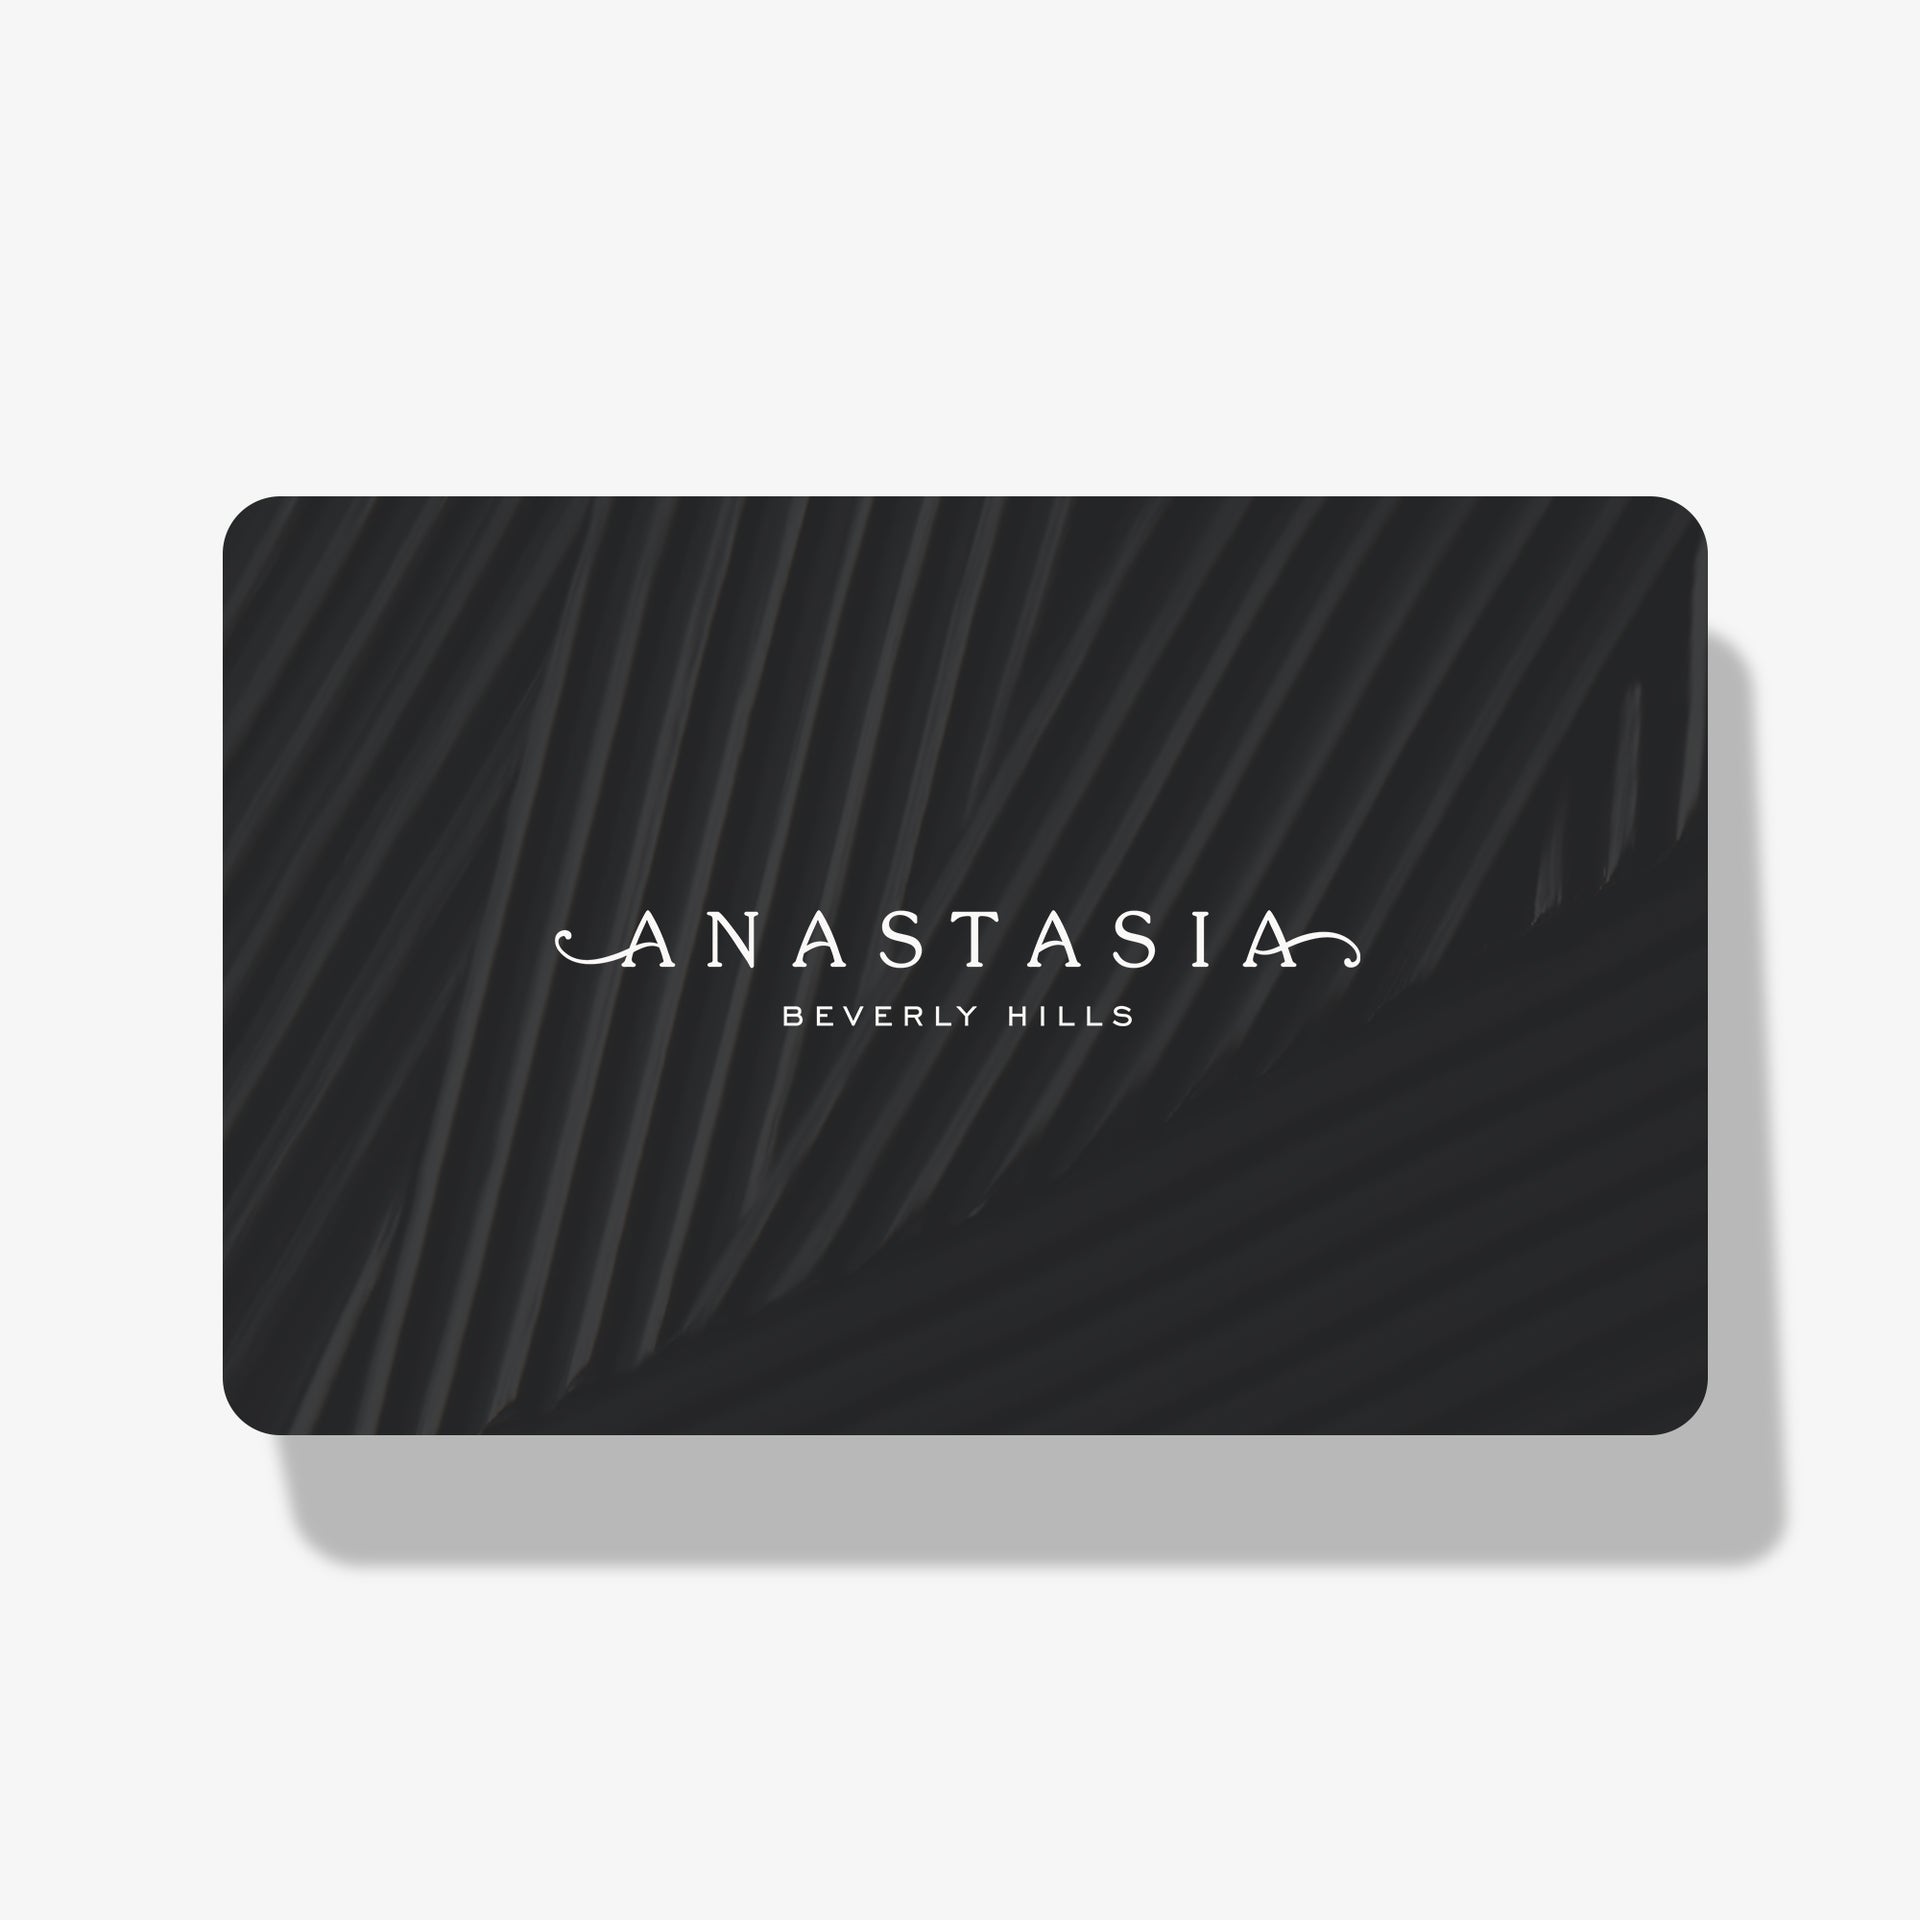 Anastasia Beverly Hills Gift Card